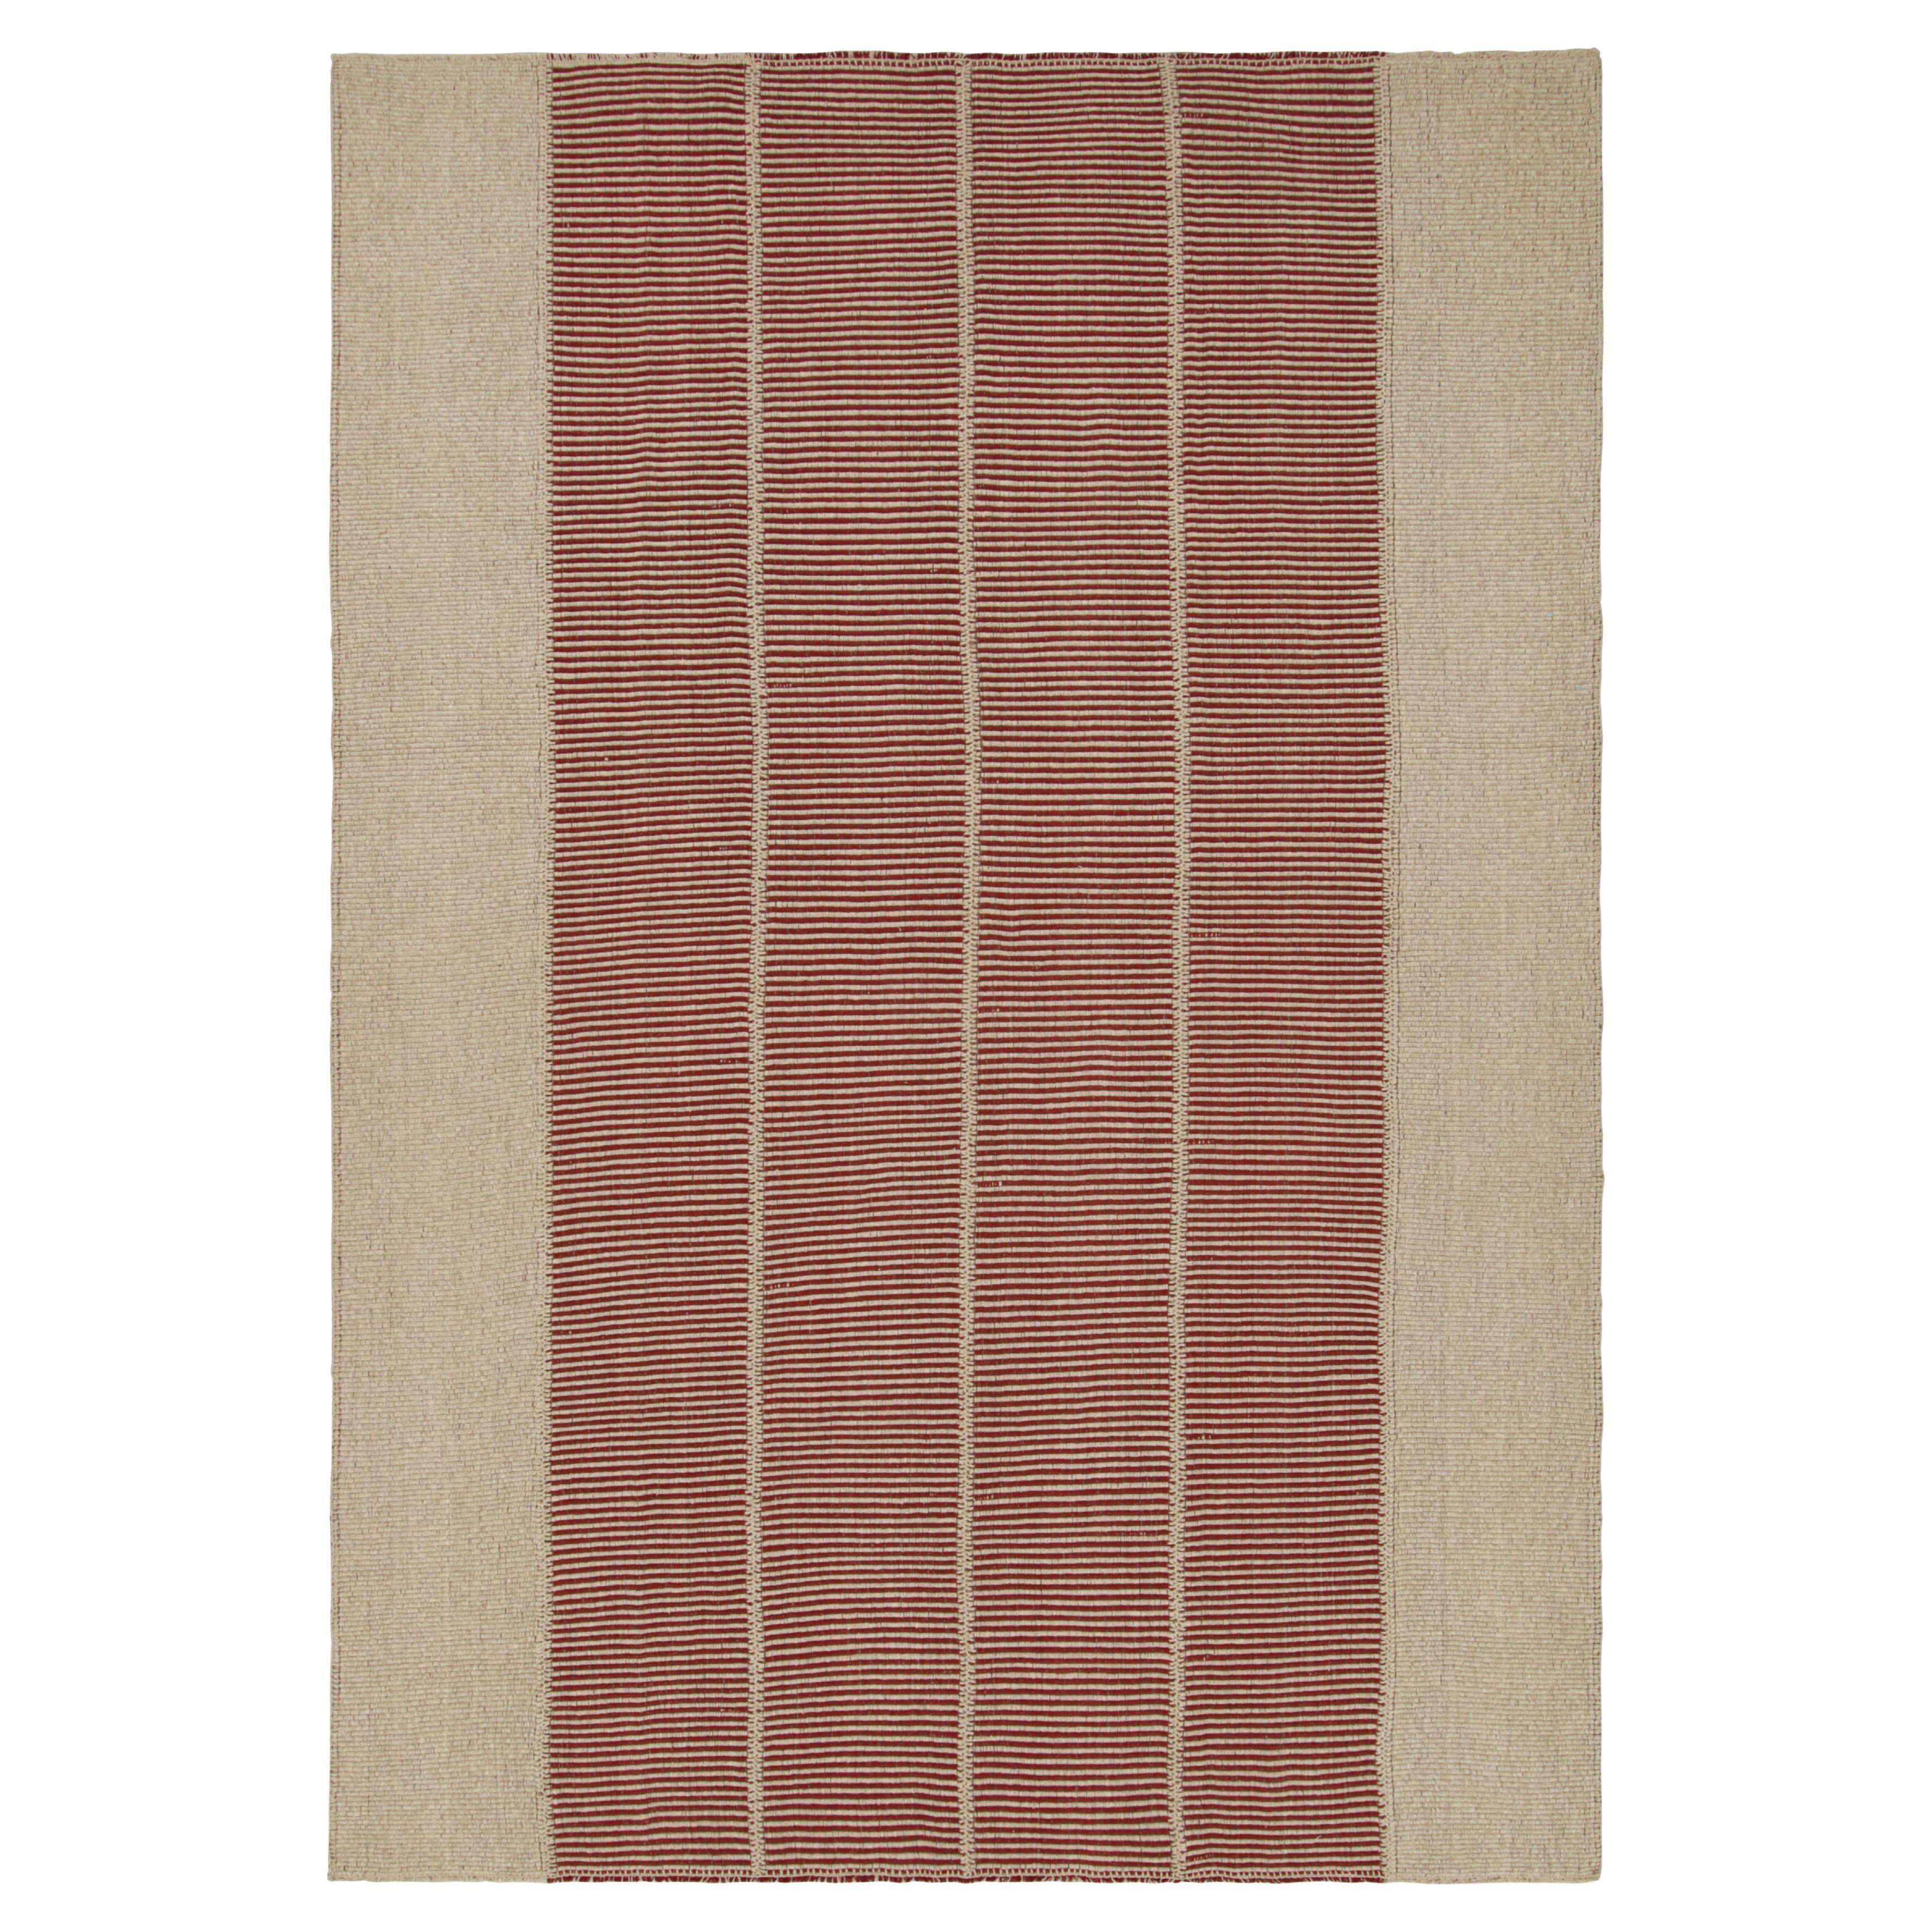 Rug & Kilim's Contemporary Kilim in Rot und Beige Textural Stripes 